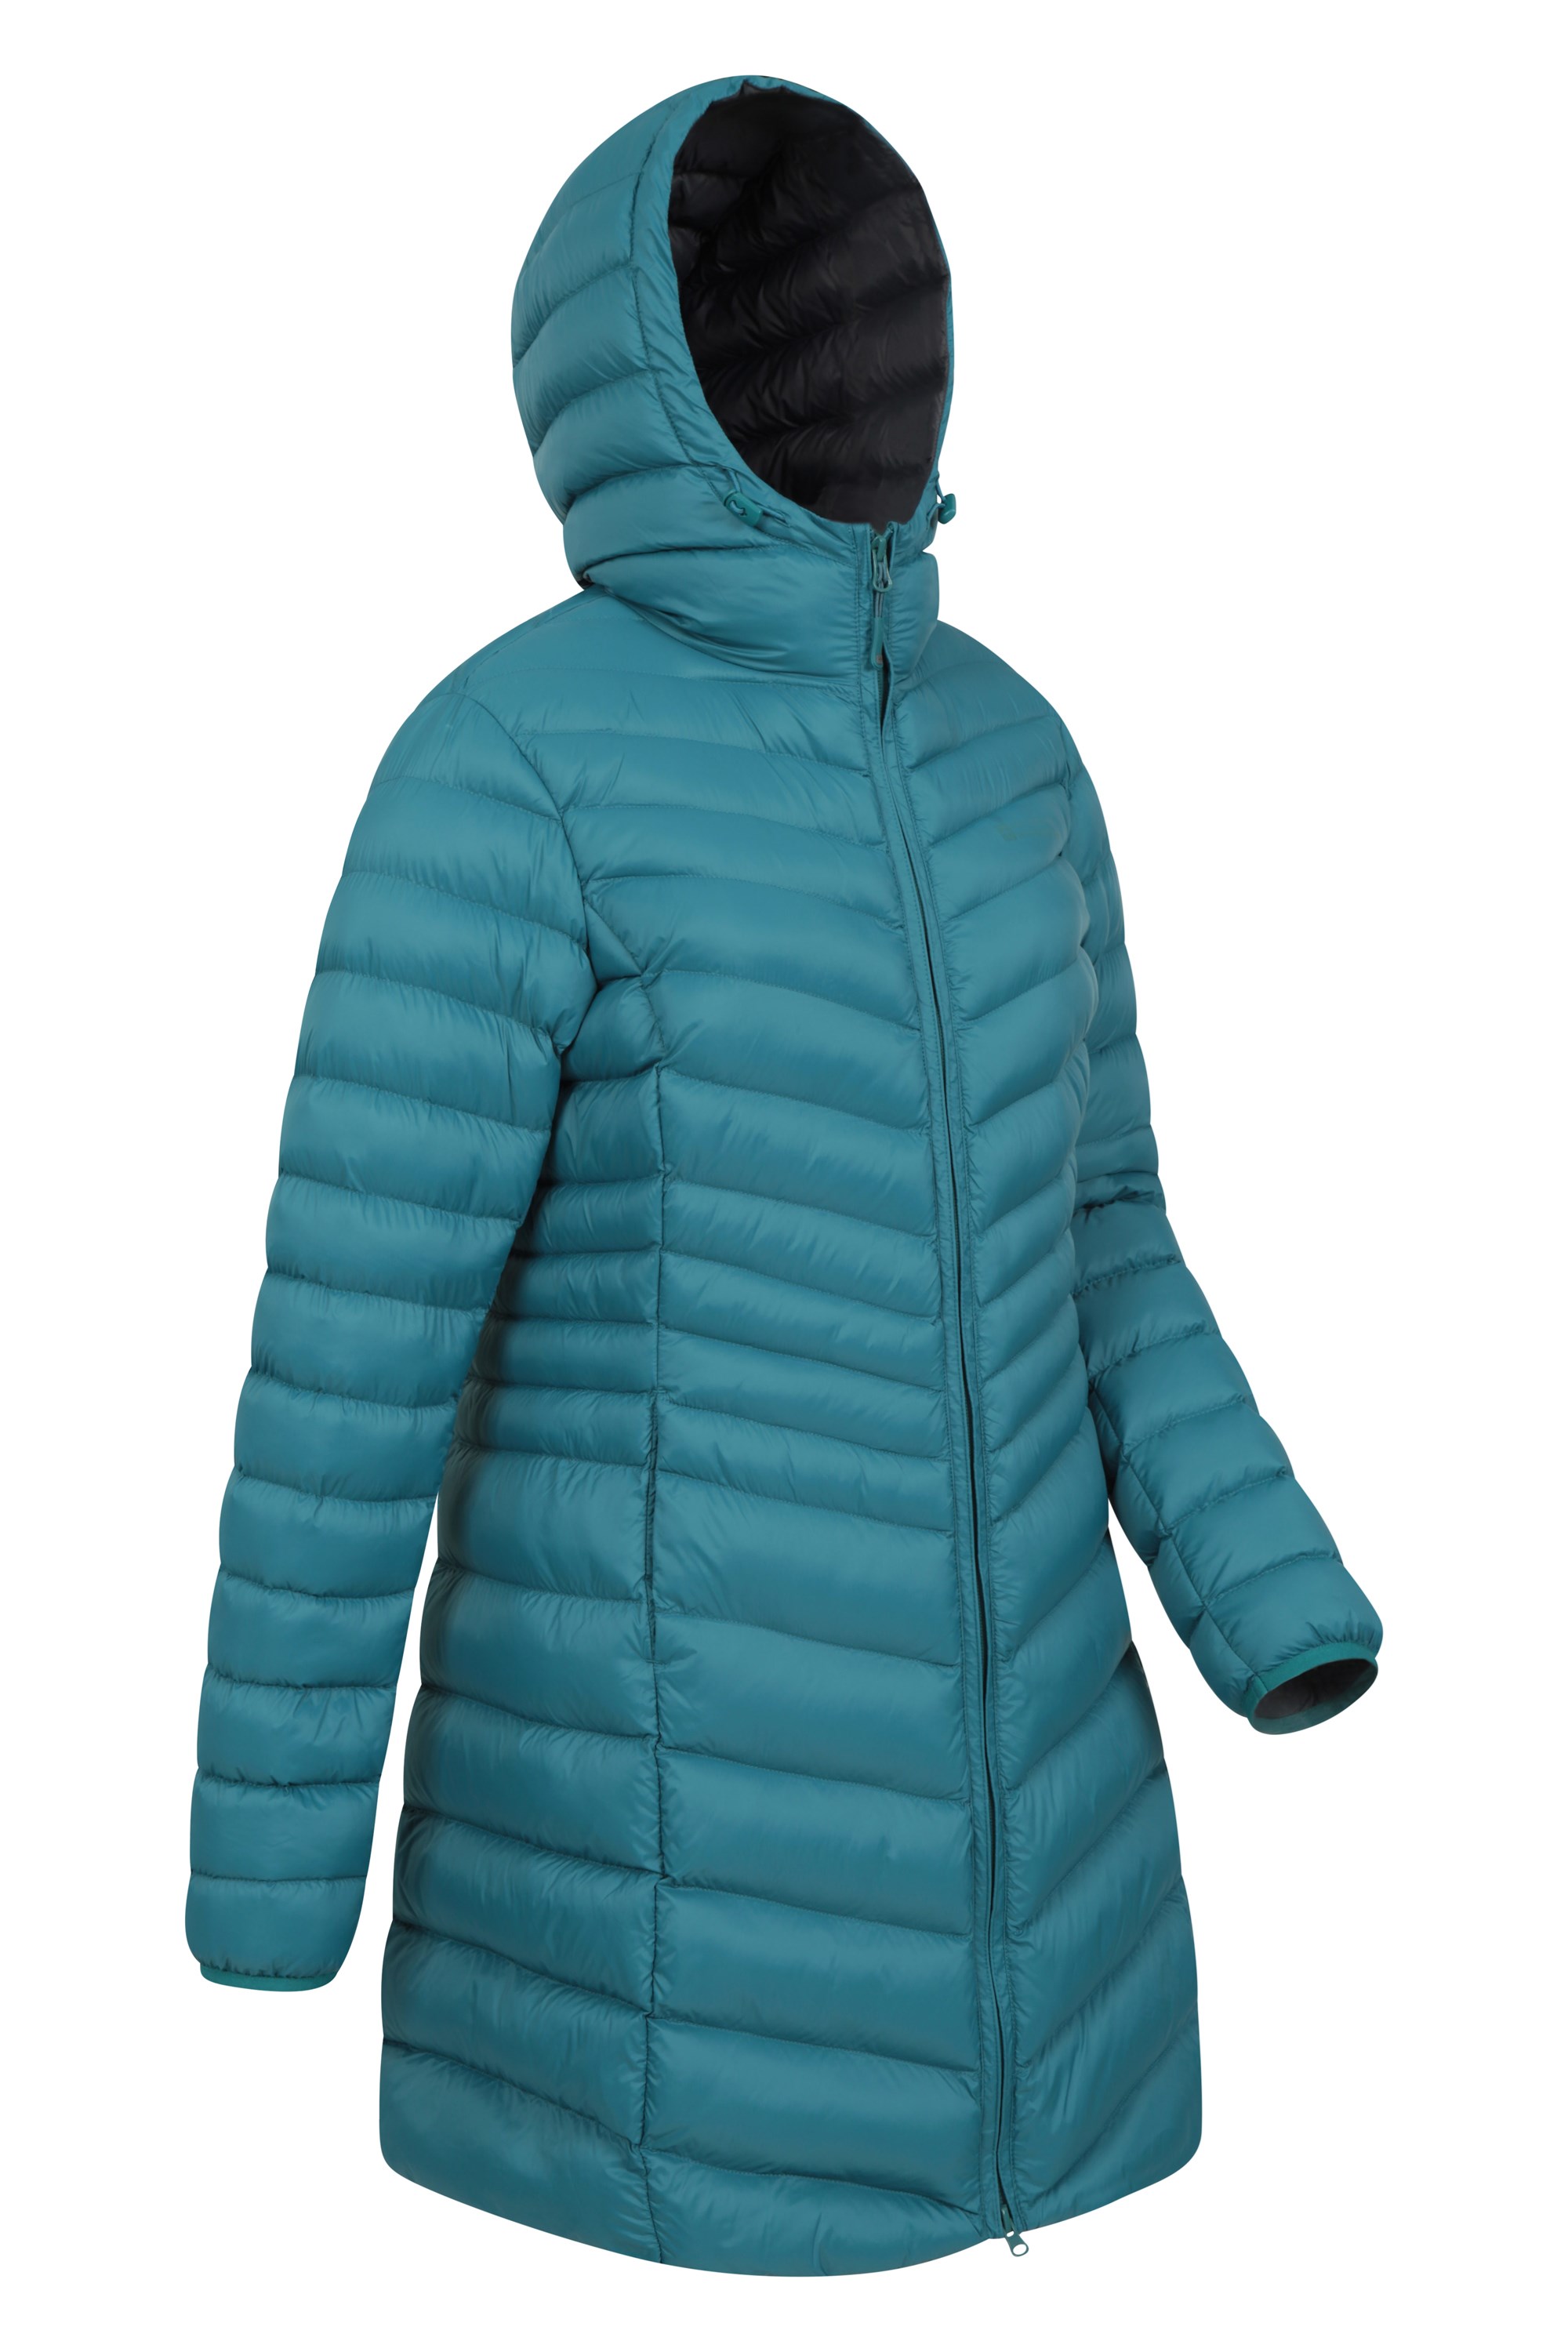 Mountain Warehouse Ladies Long Padded Jacket Water Resistant Winter Womens Coat 